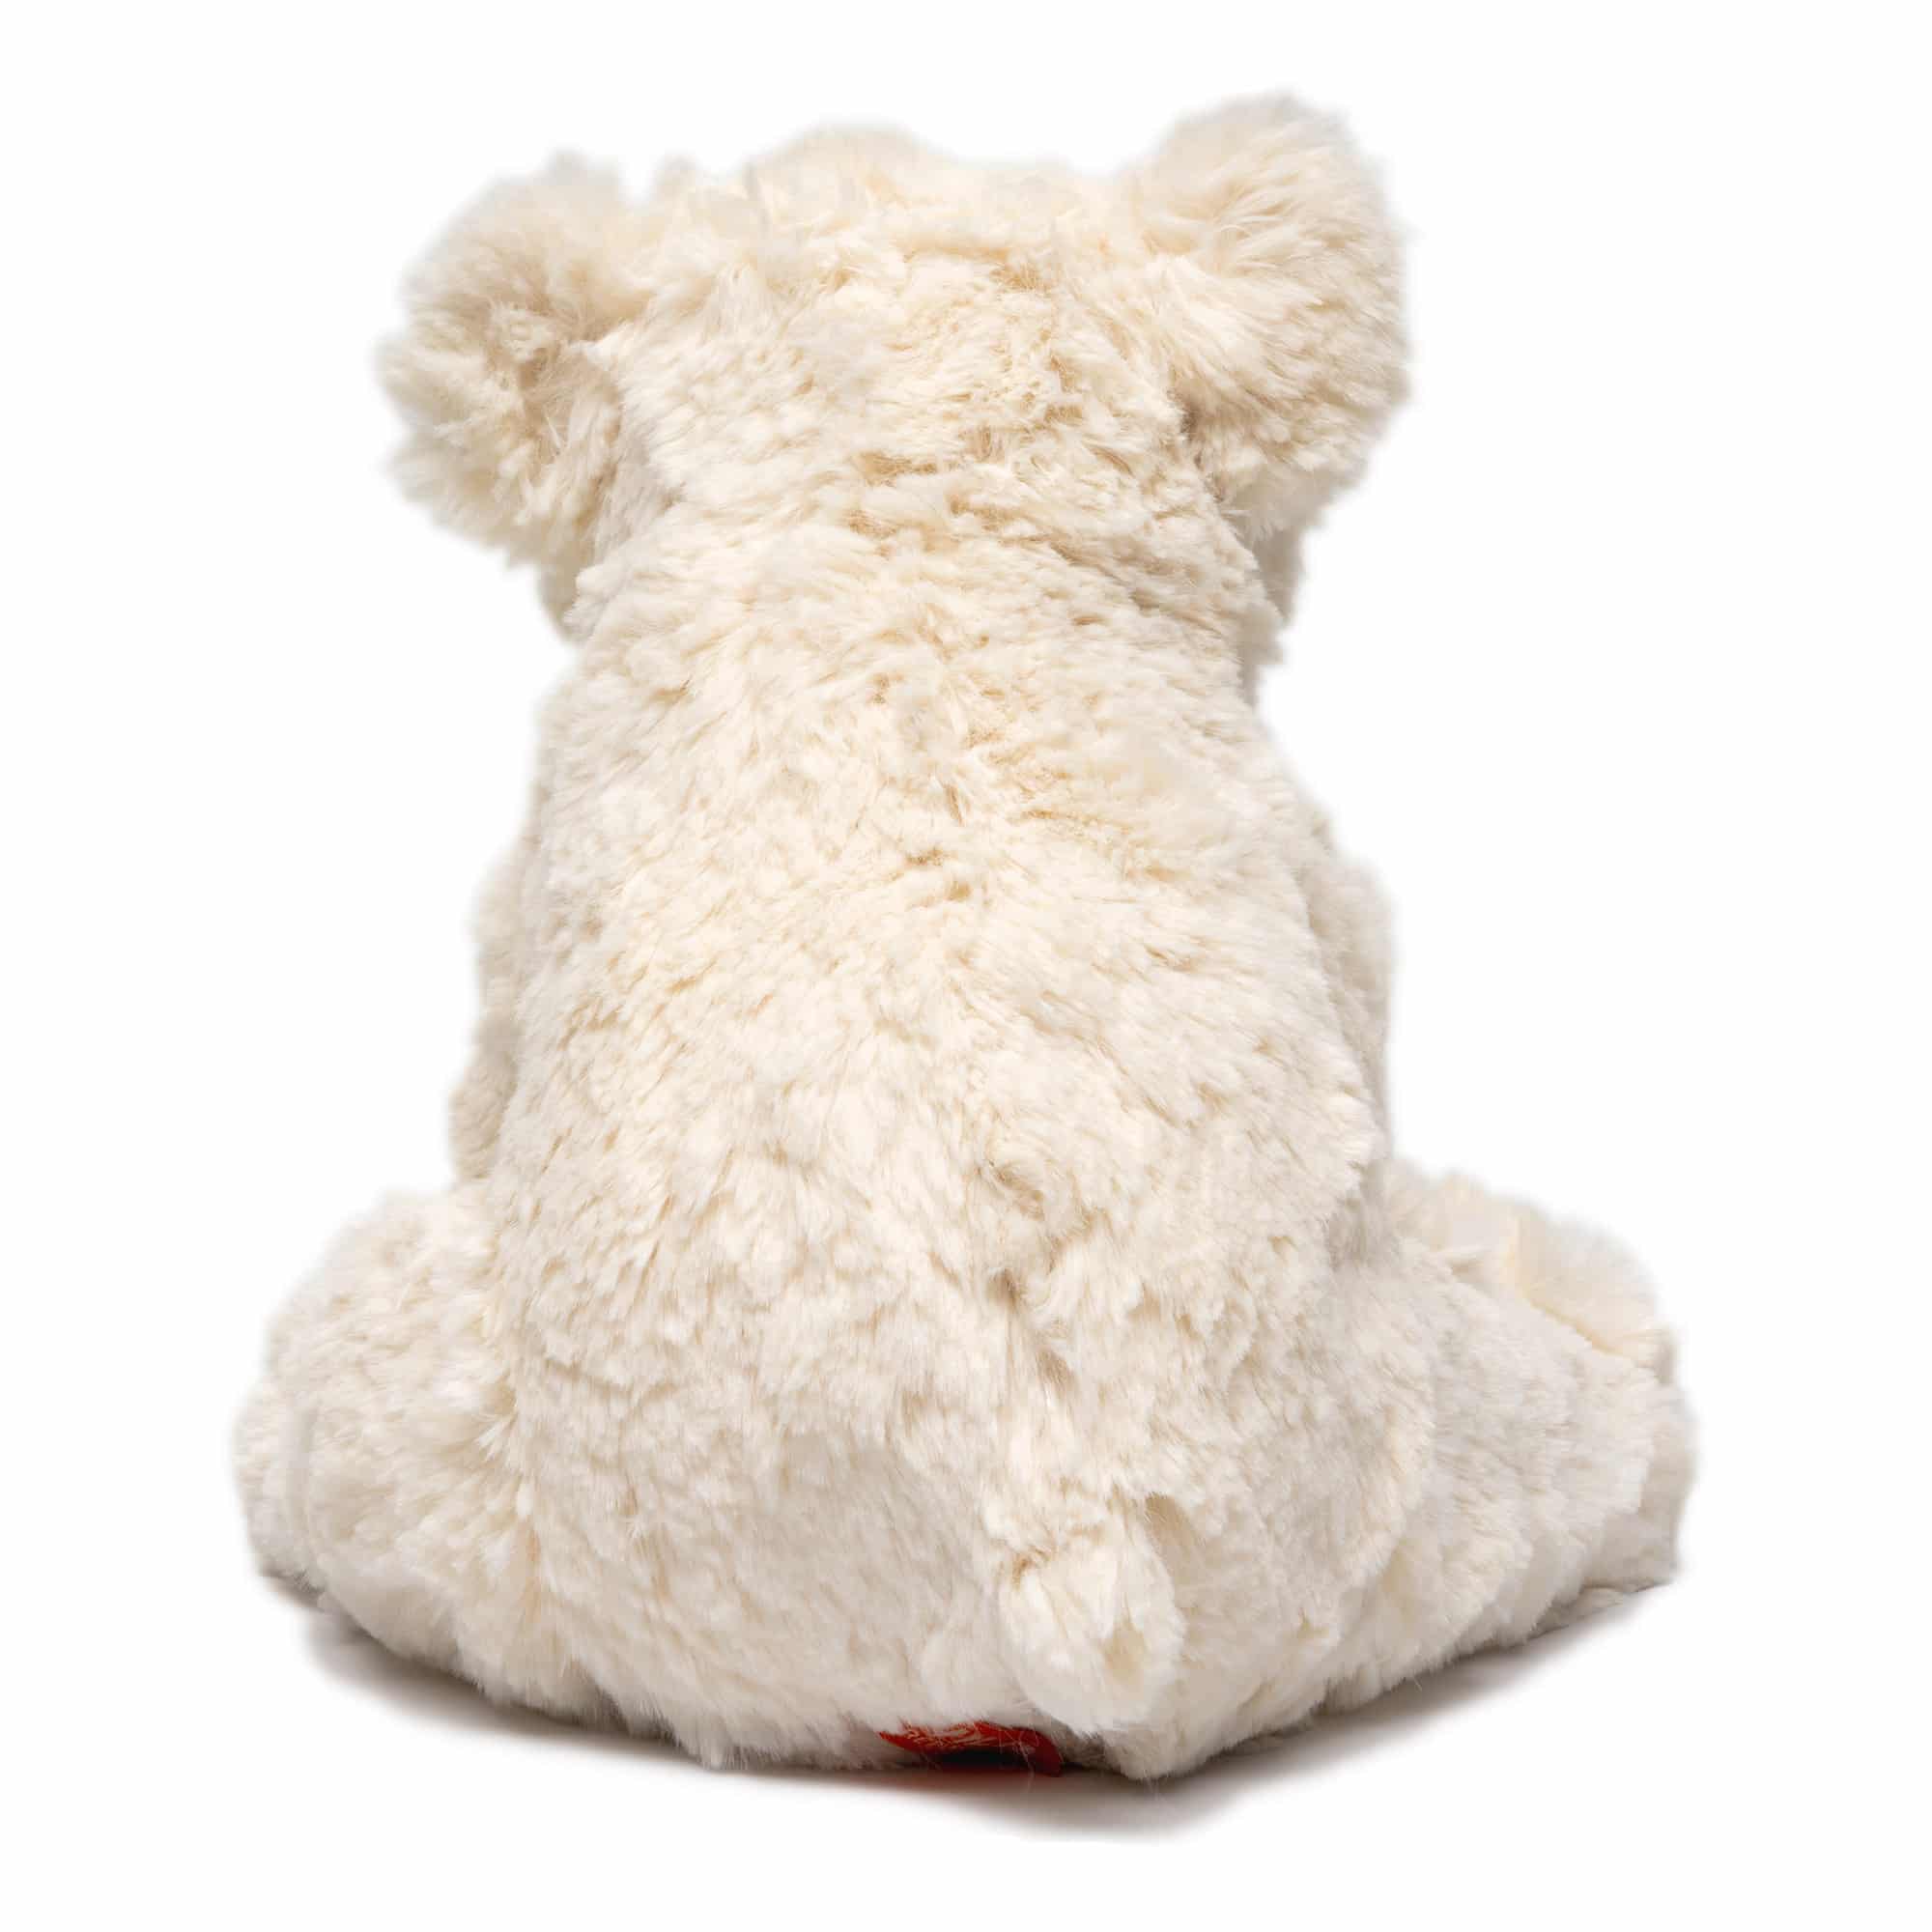 Wild Repubic - Cuddlekins Baby Polar Bear - 30cm Plush